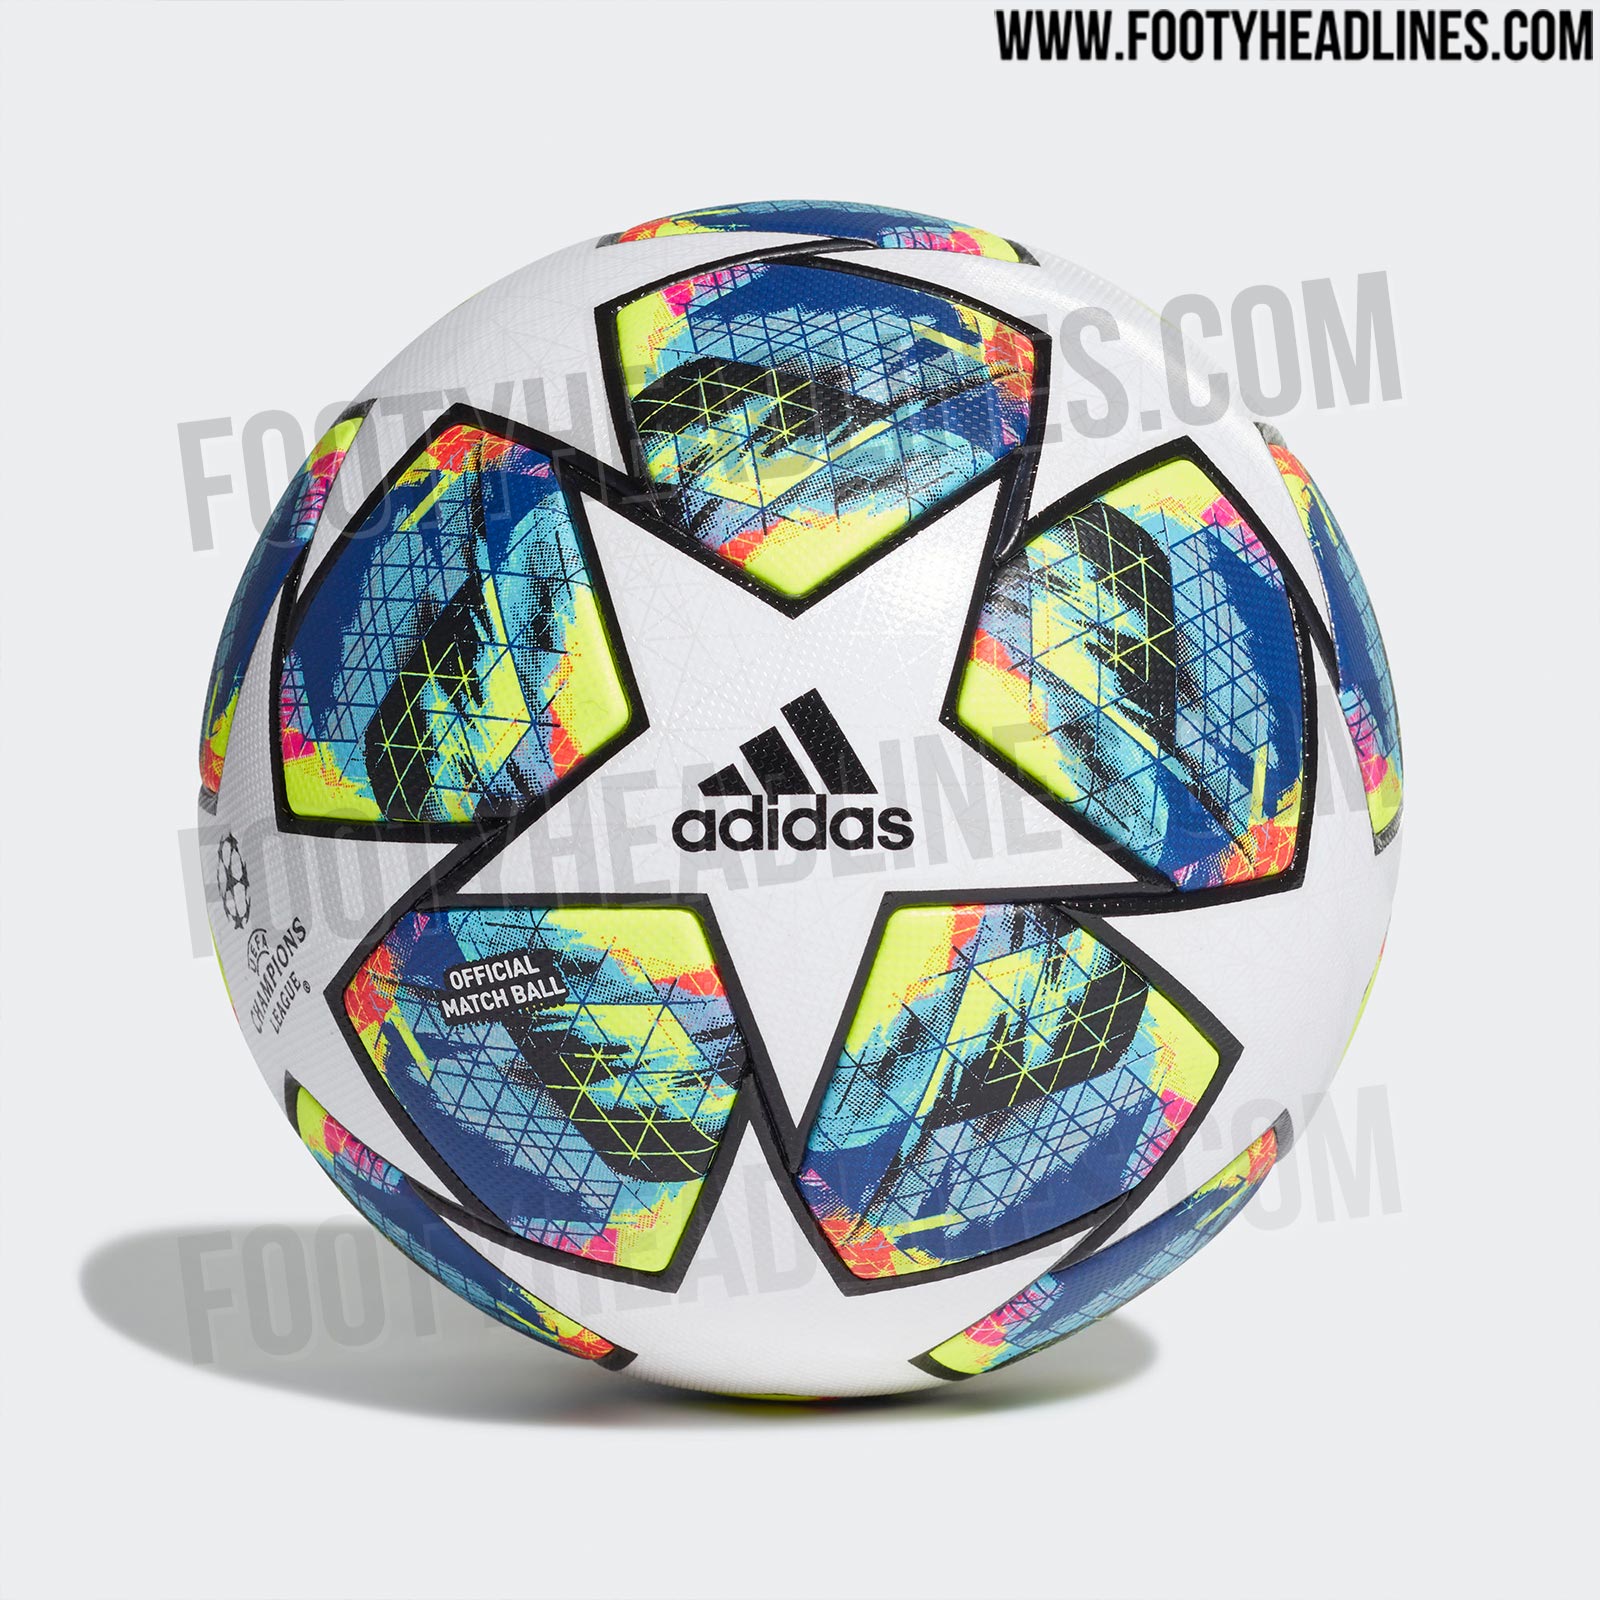 champions league 2019 soccer ball